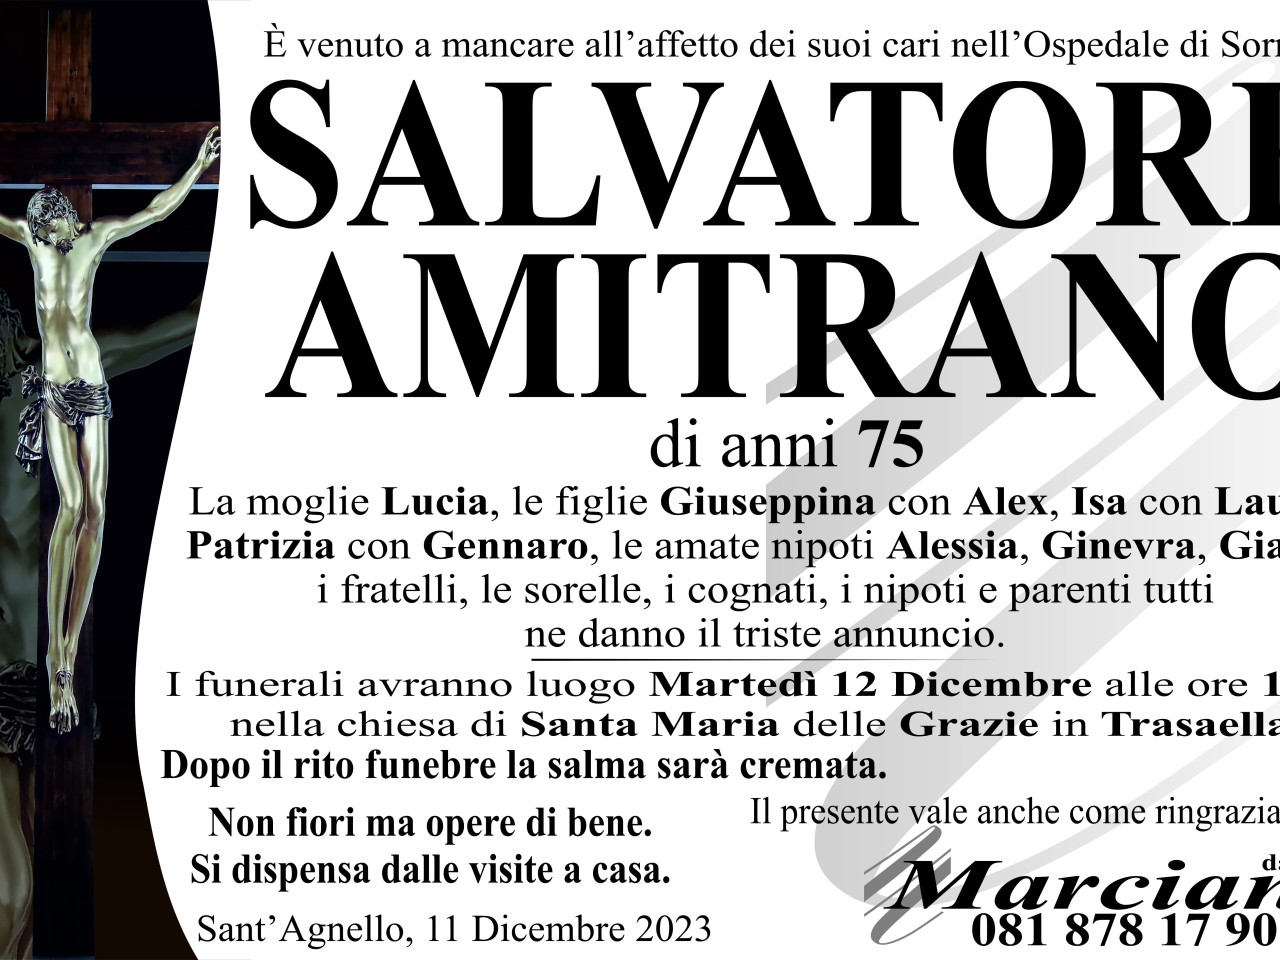 Salvatore Amitrano